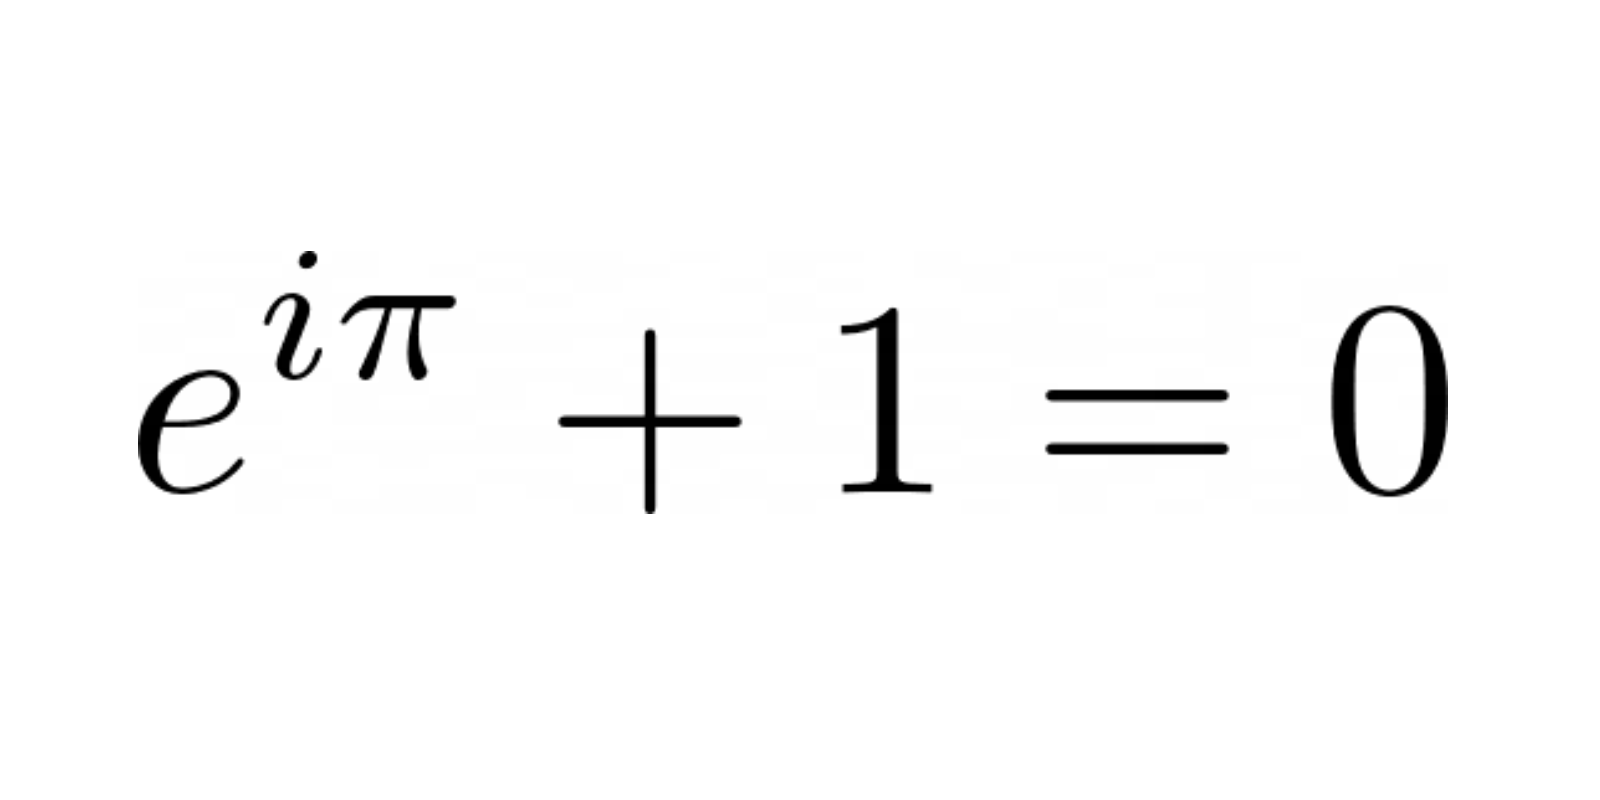 Euler's Identity e to the power i times pi, plus one, equals zero